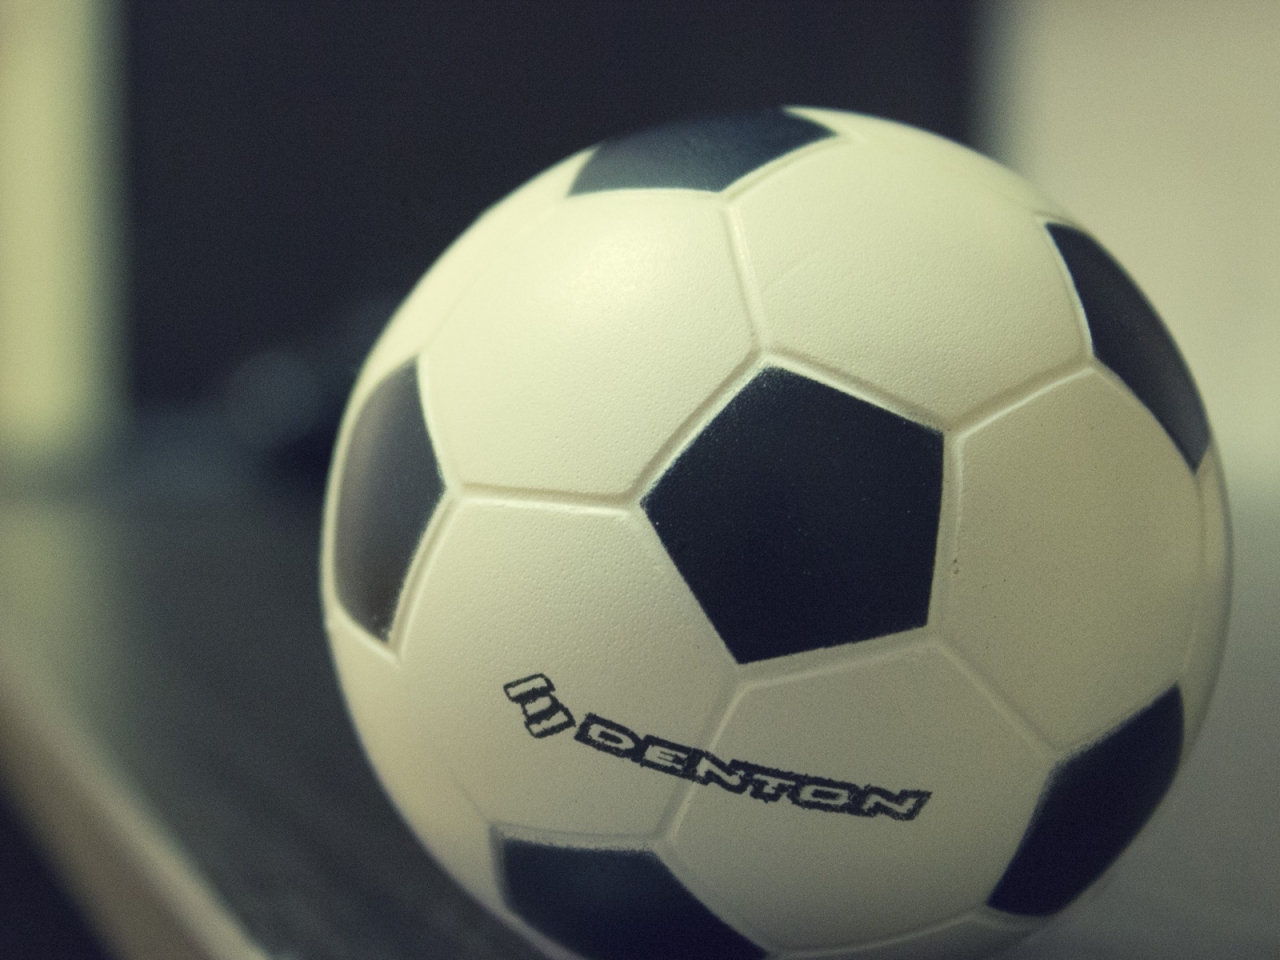 Denton Soccer Ball for 1280 x 960 resolution